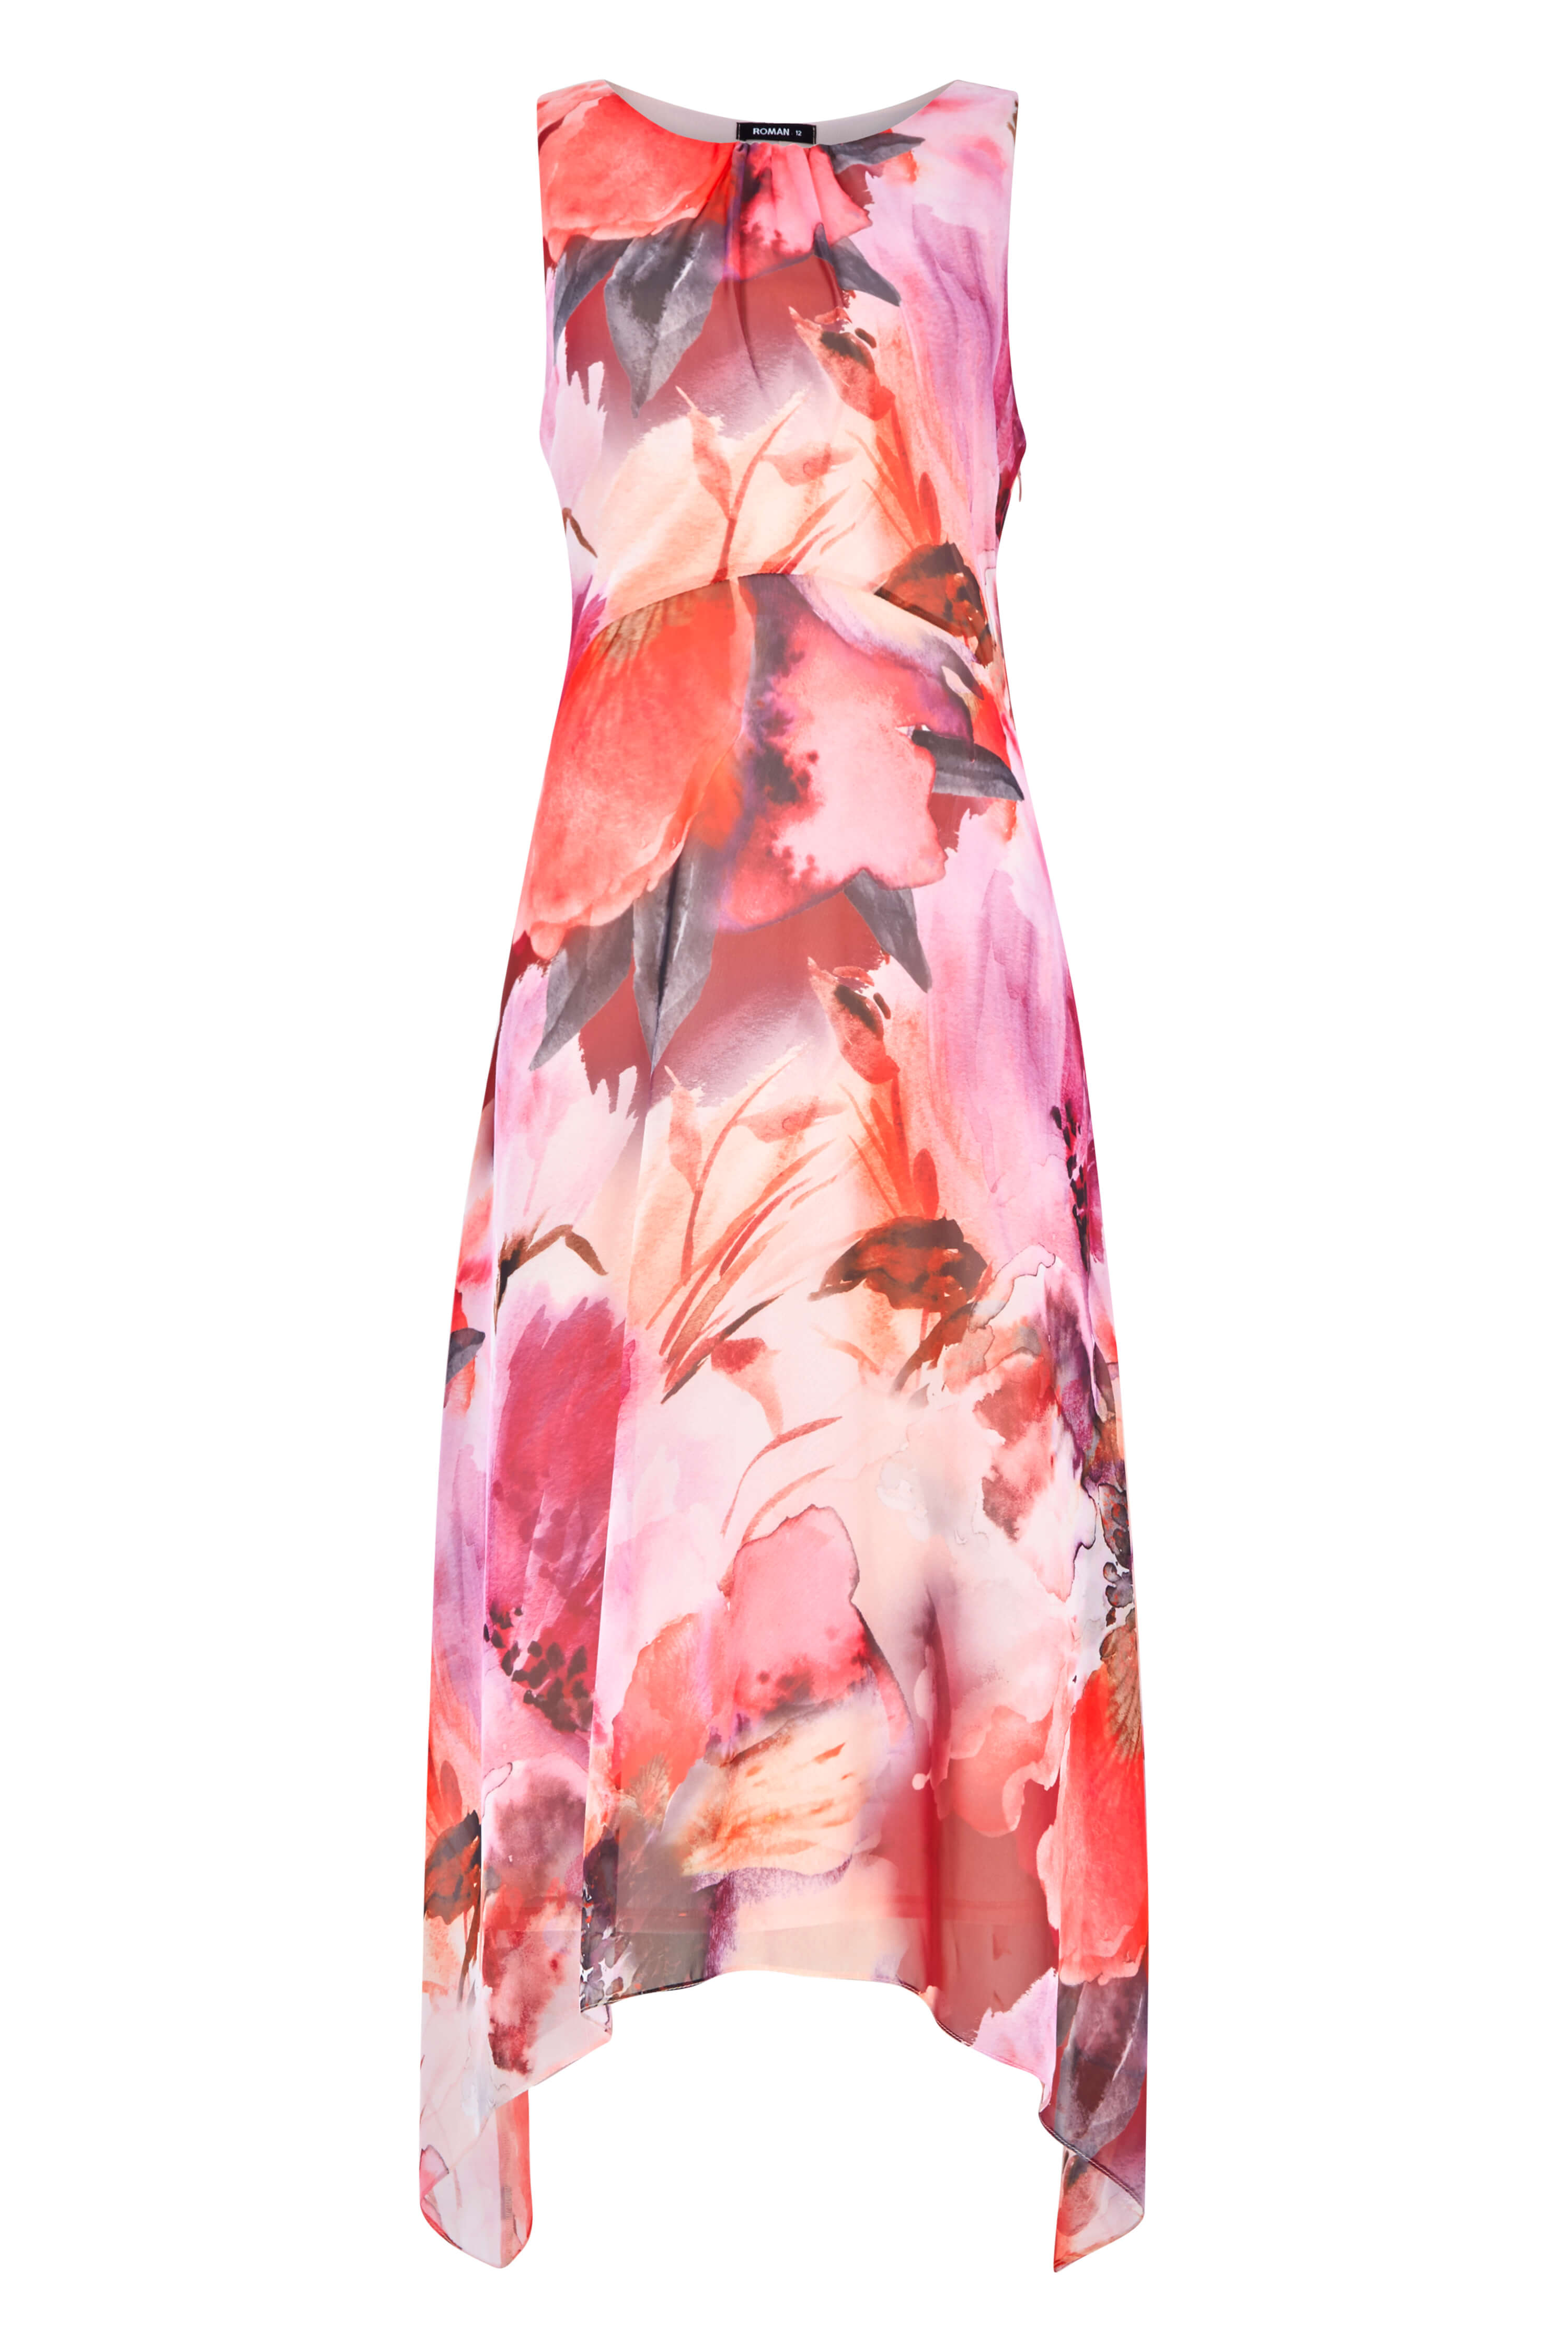 PINK Floral Chiffon Dress, Image 4 of 4